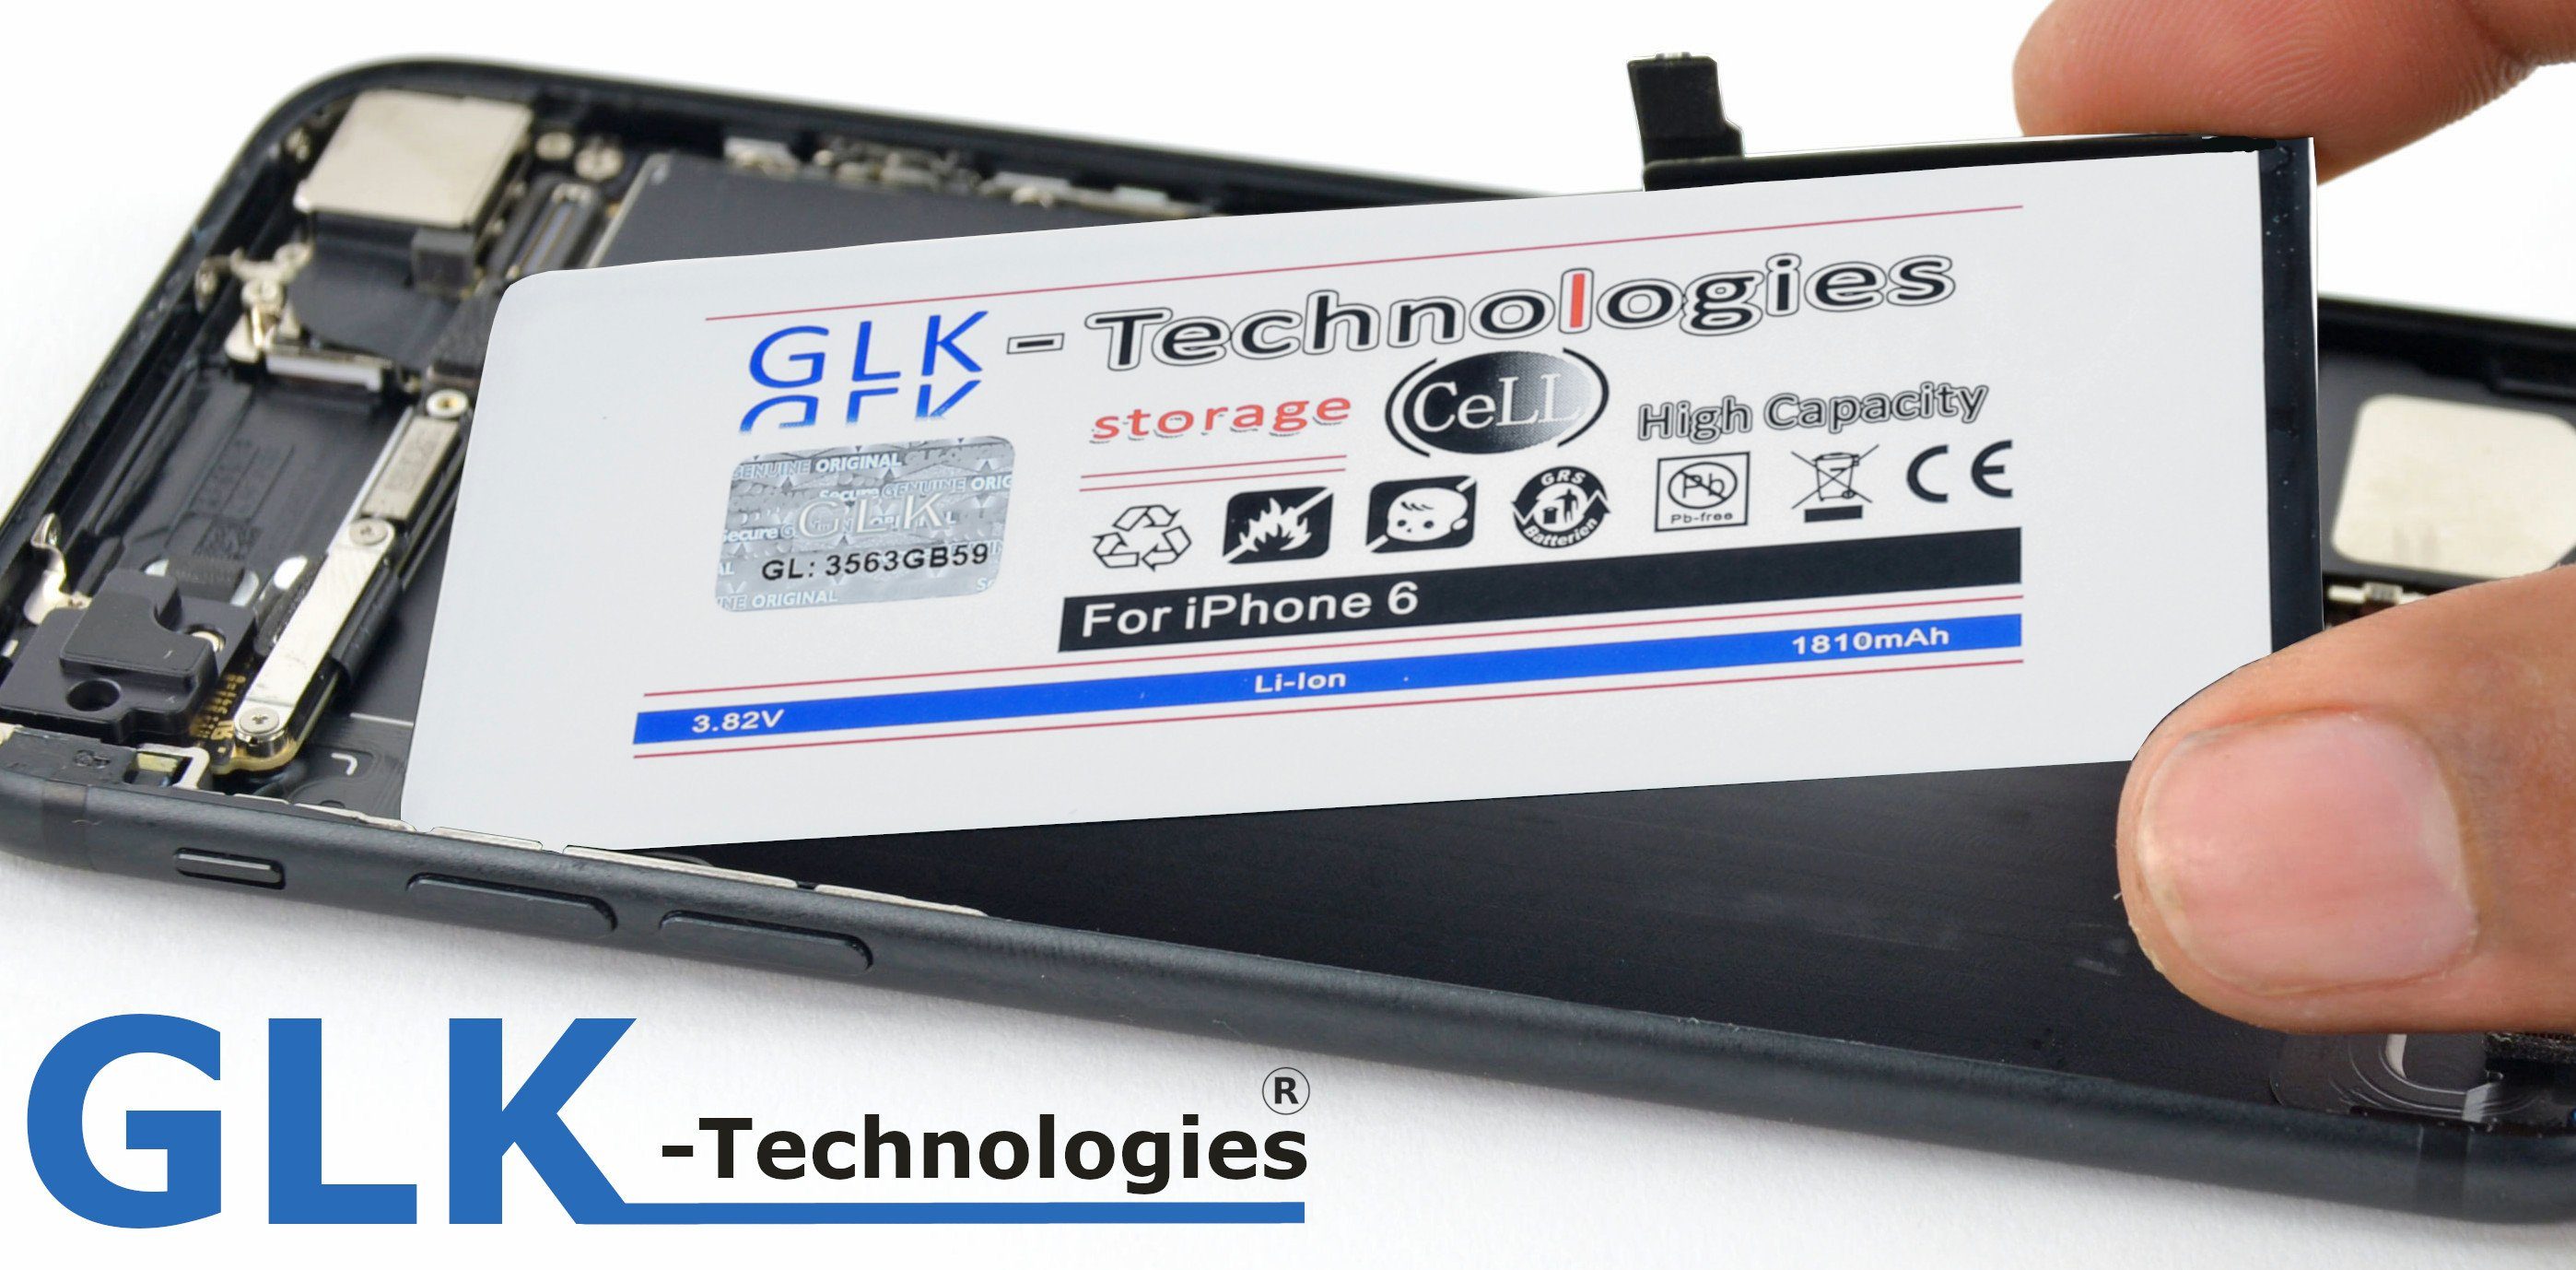 1810 Apple iPhone Smartphone-Akku für (3,8 Ersatz 6 V) Akku Akku GLK-Technologies Verbesserter mAh